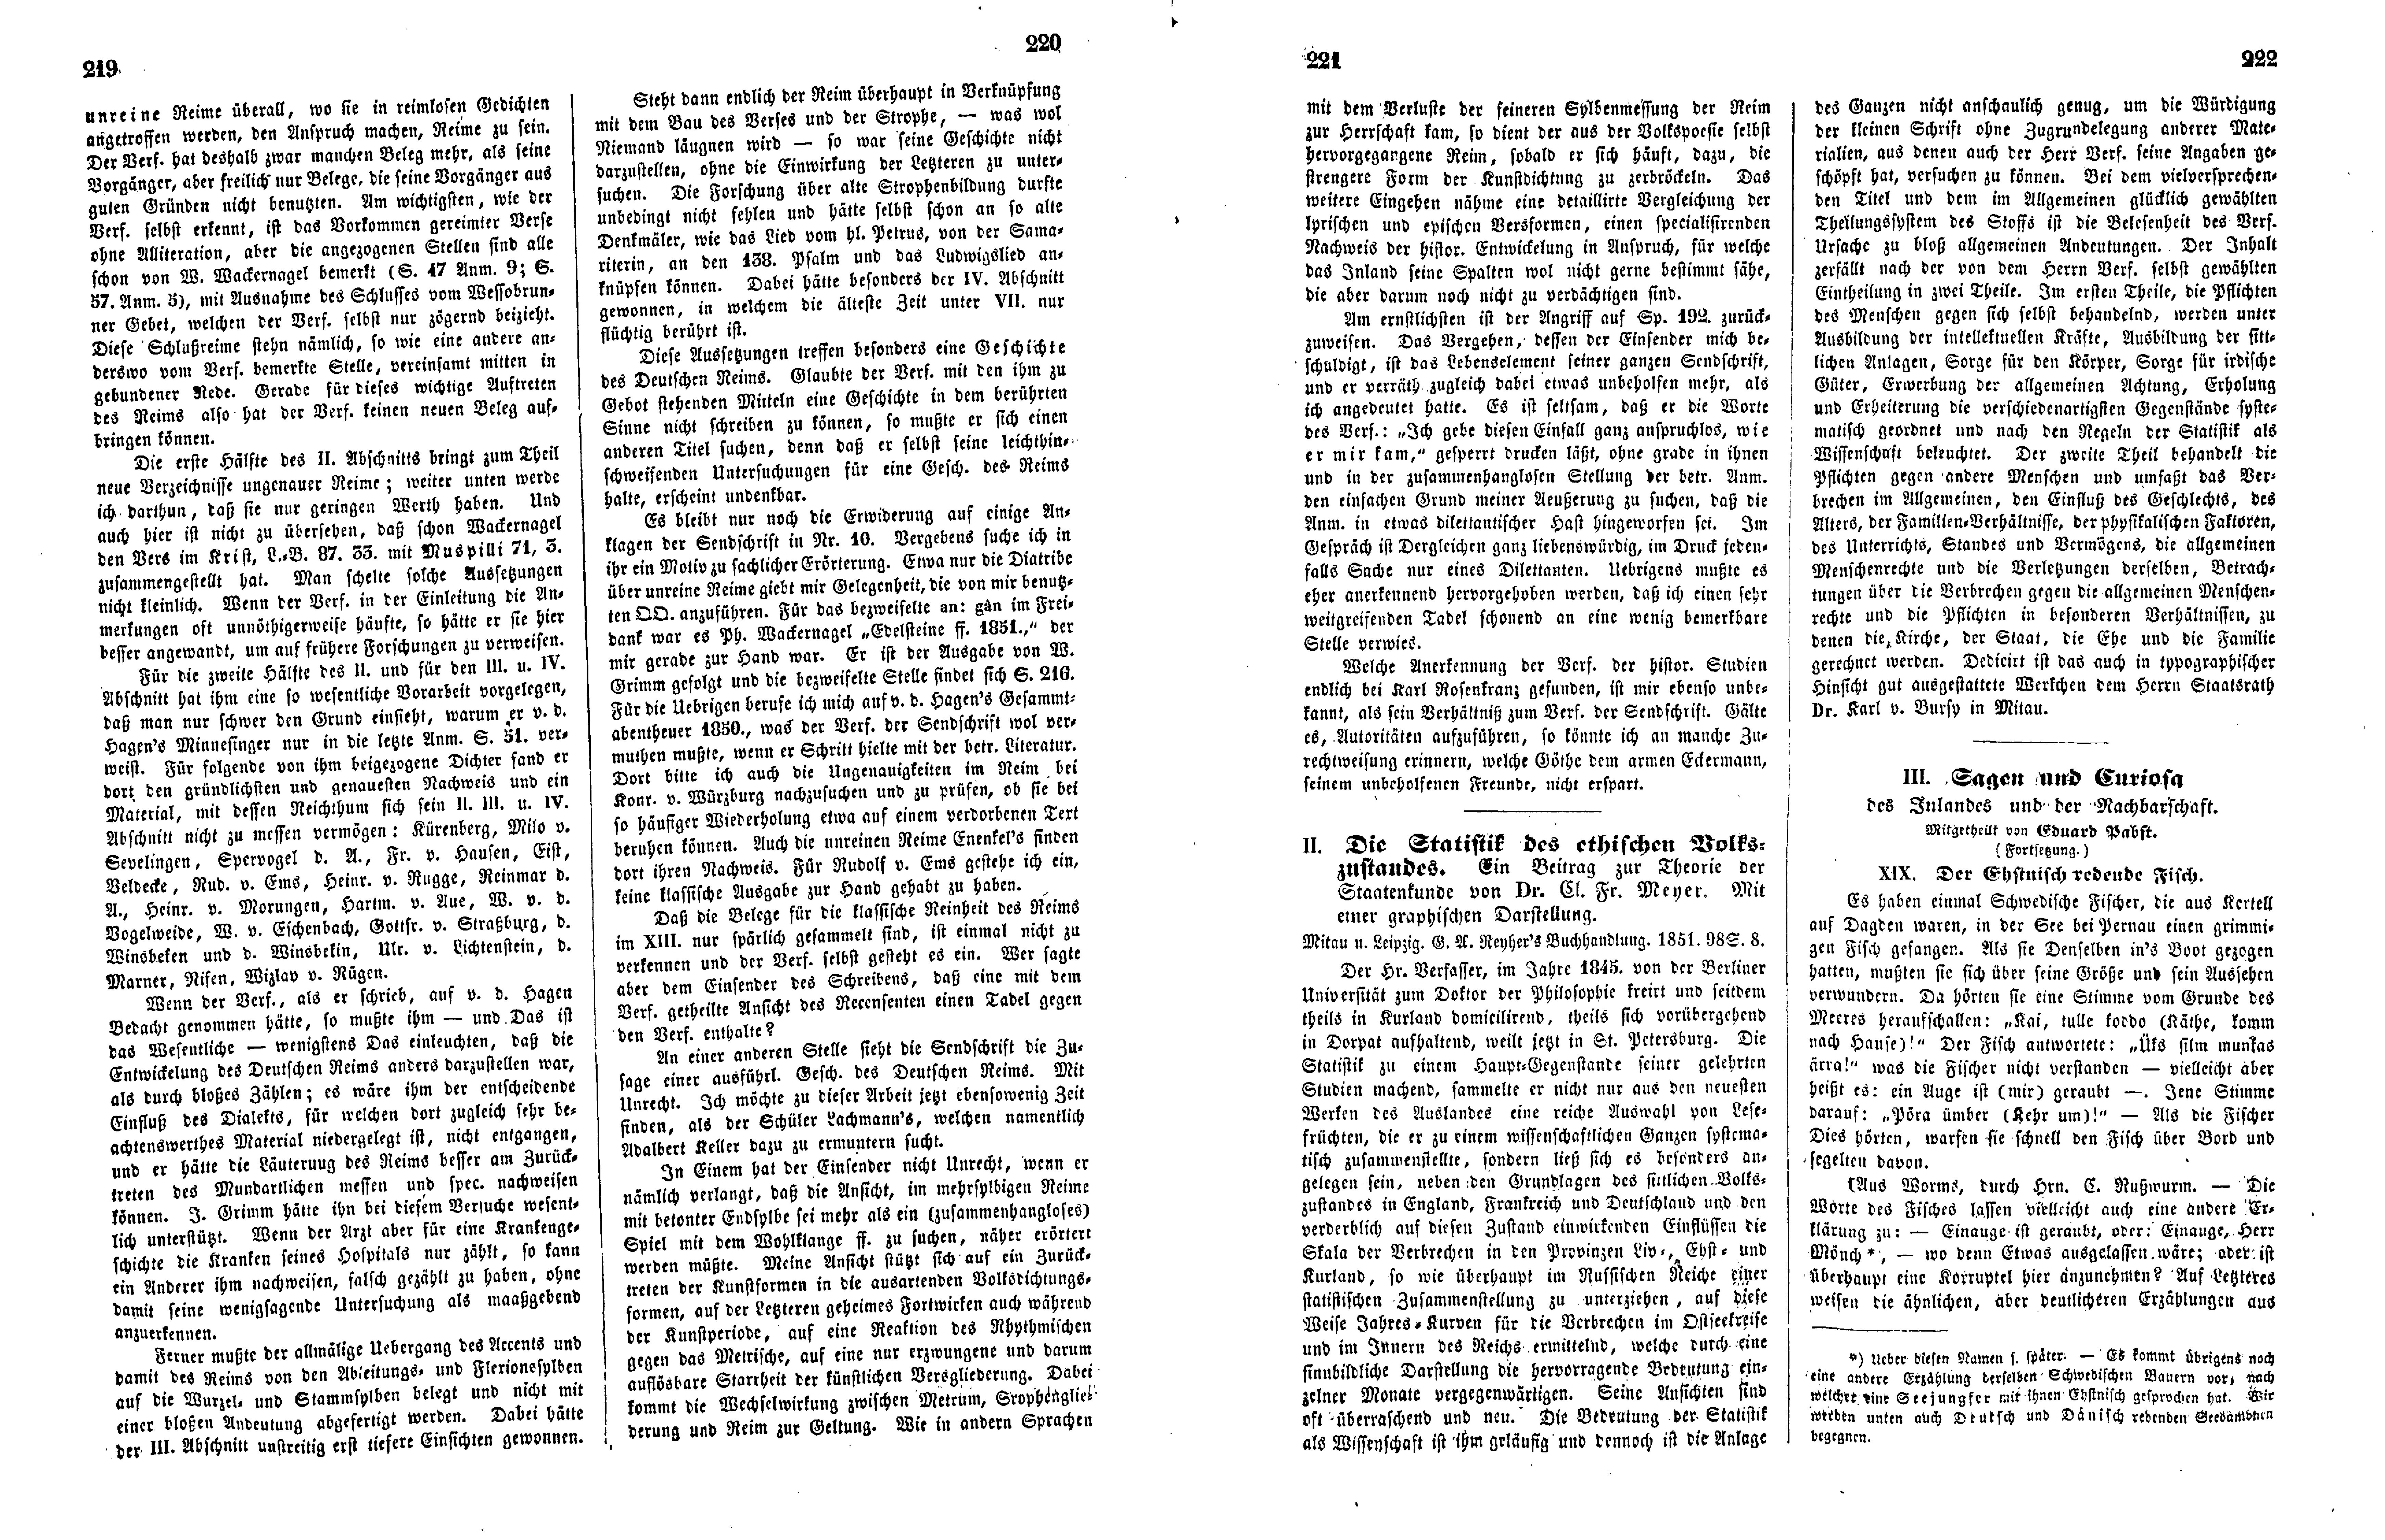 Das Inland [17] (1852) | 59. (219-222) Main body of text